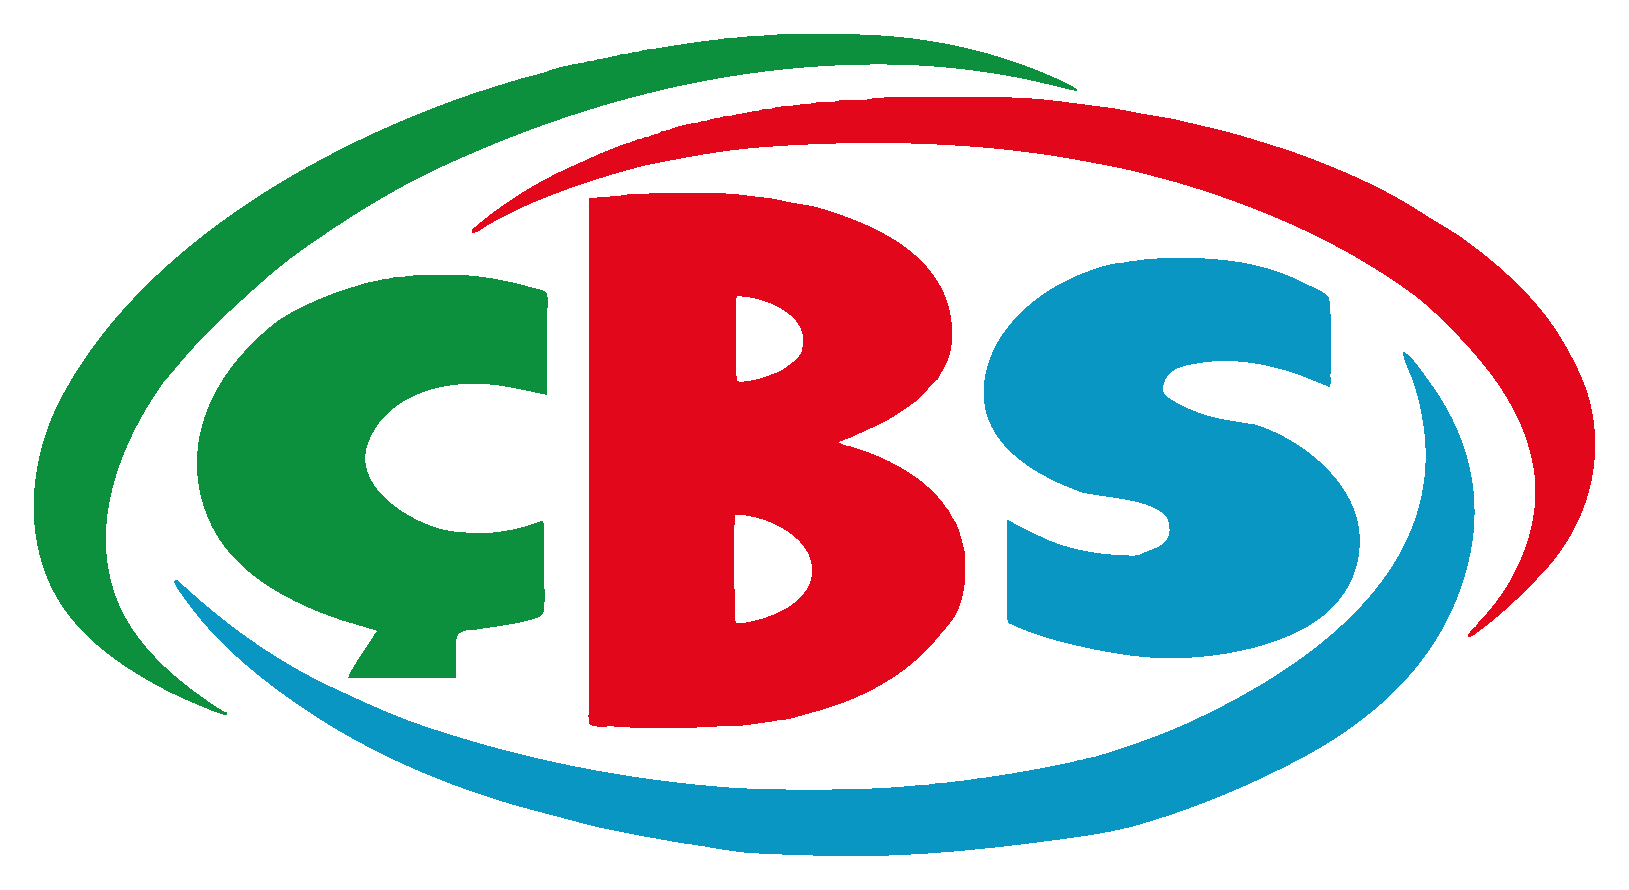 CBS Boya Logo